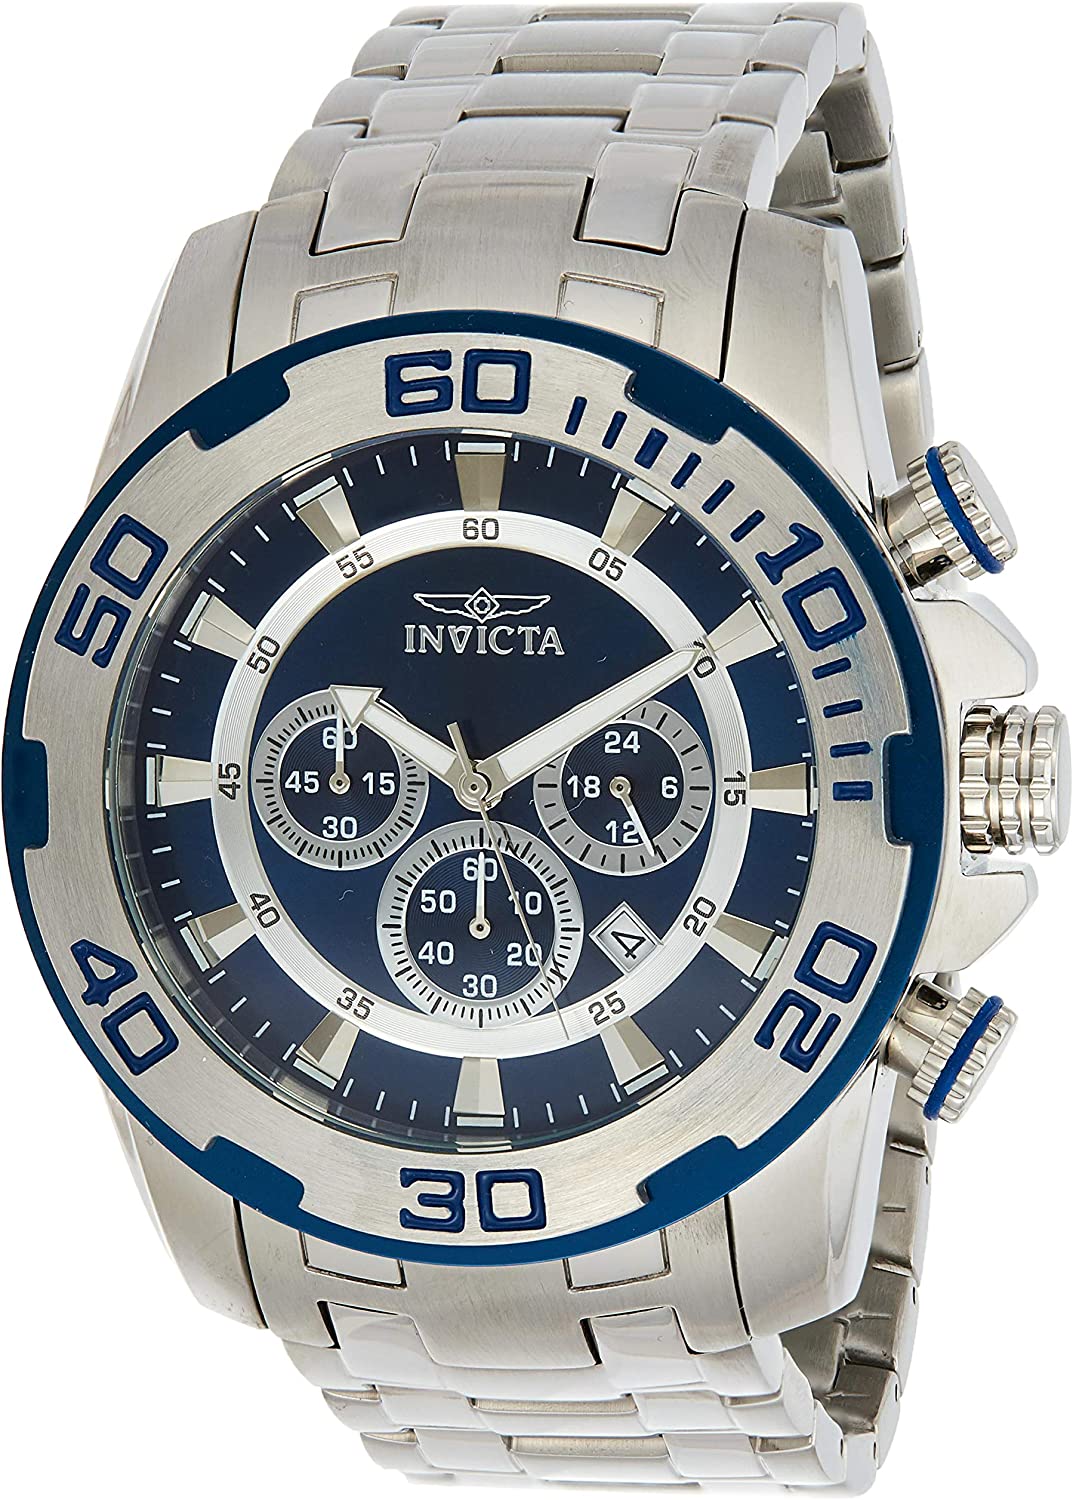 88% OFF Invicta Men's 22319 Pro Diver Analog Display Quartz Silver Watch $92.7